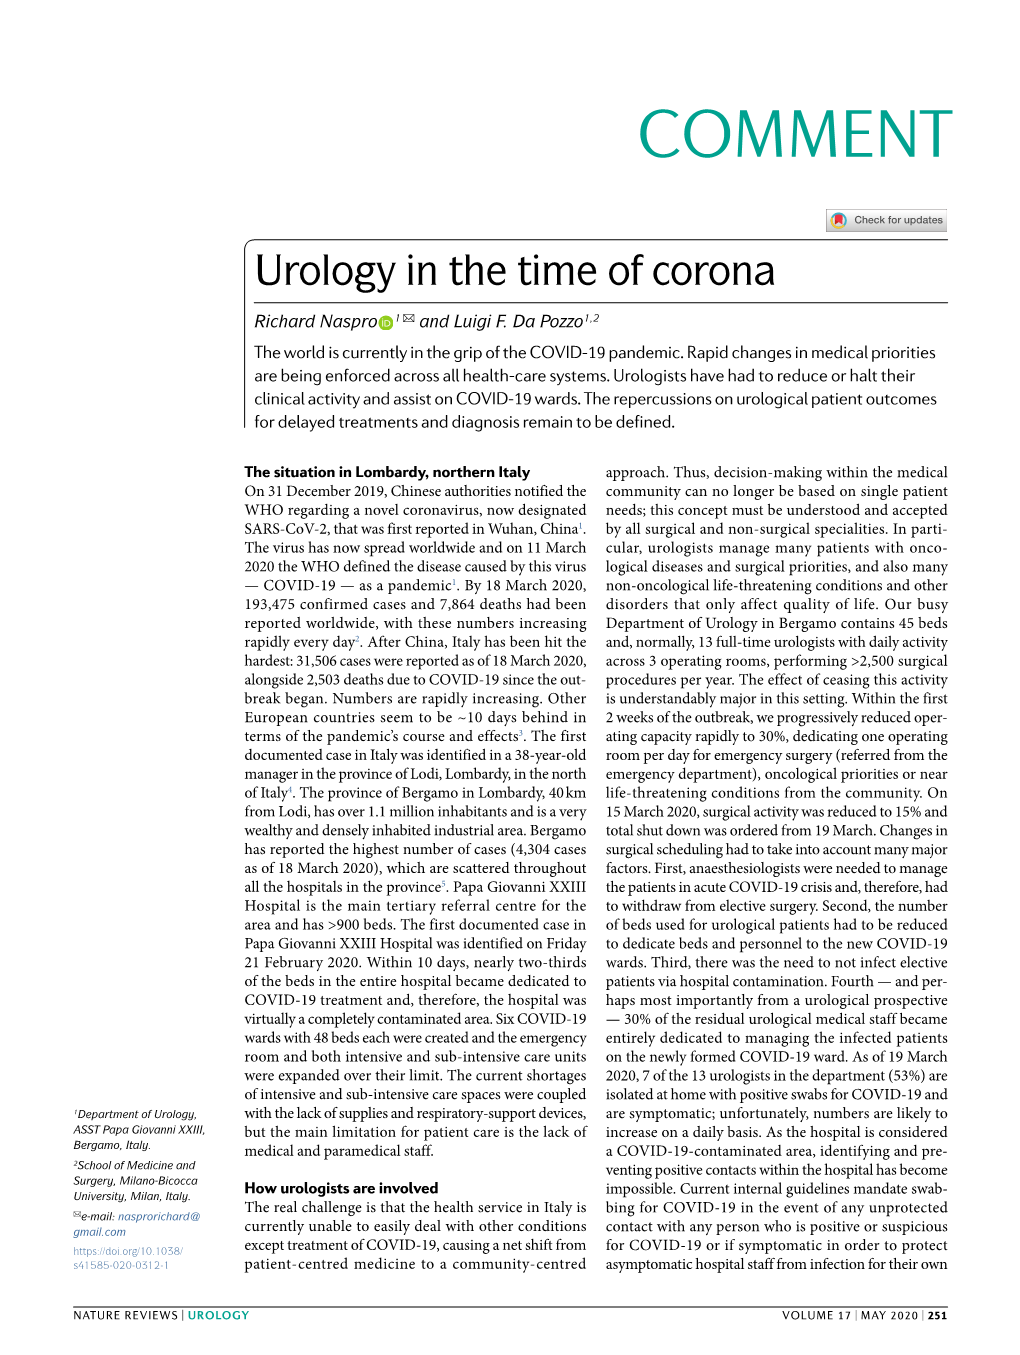 Urology in the Time of Corona